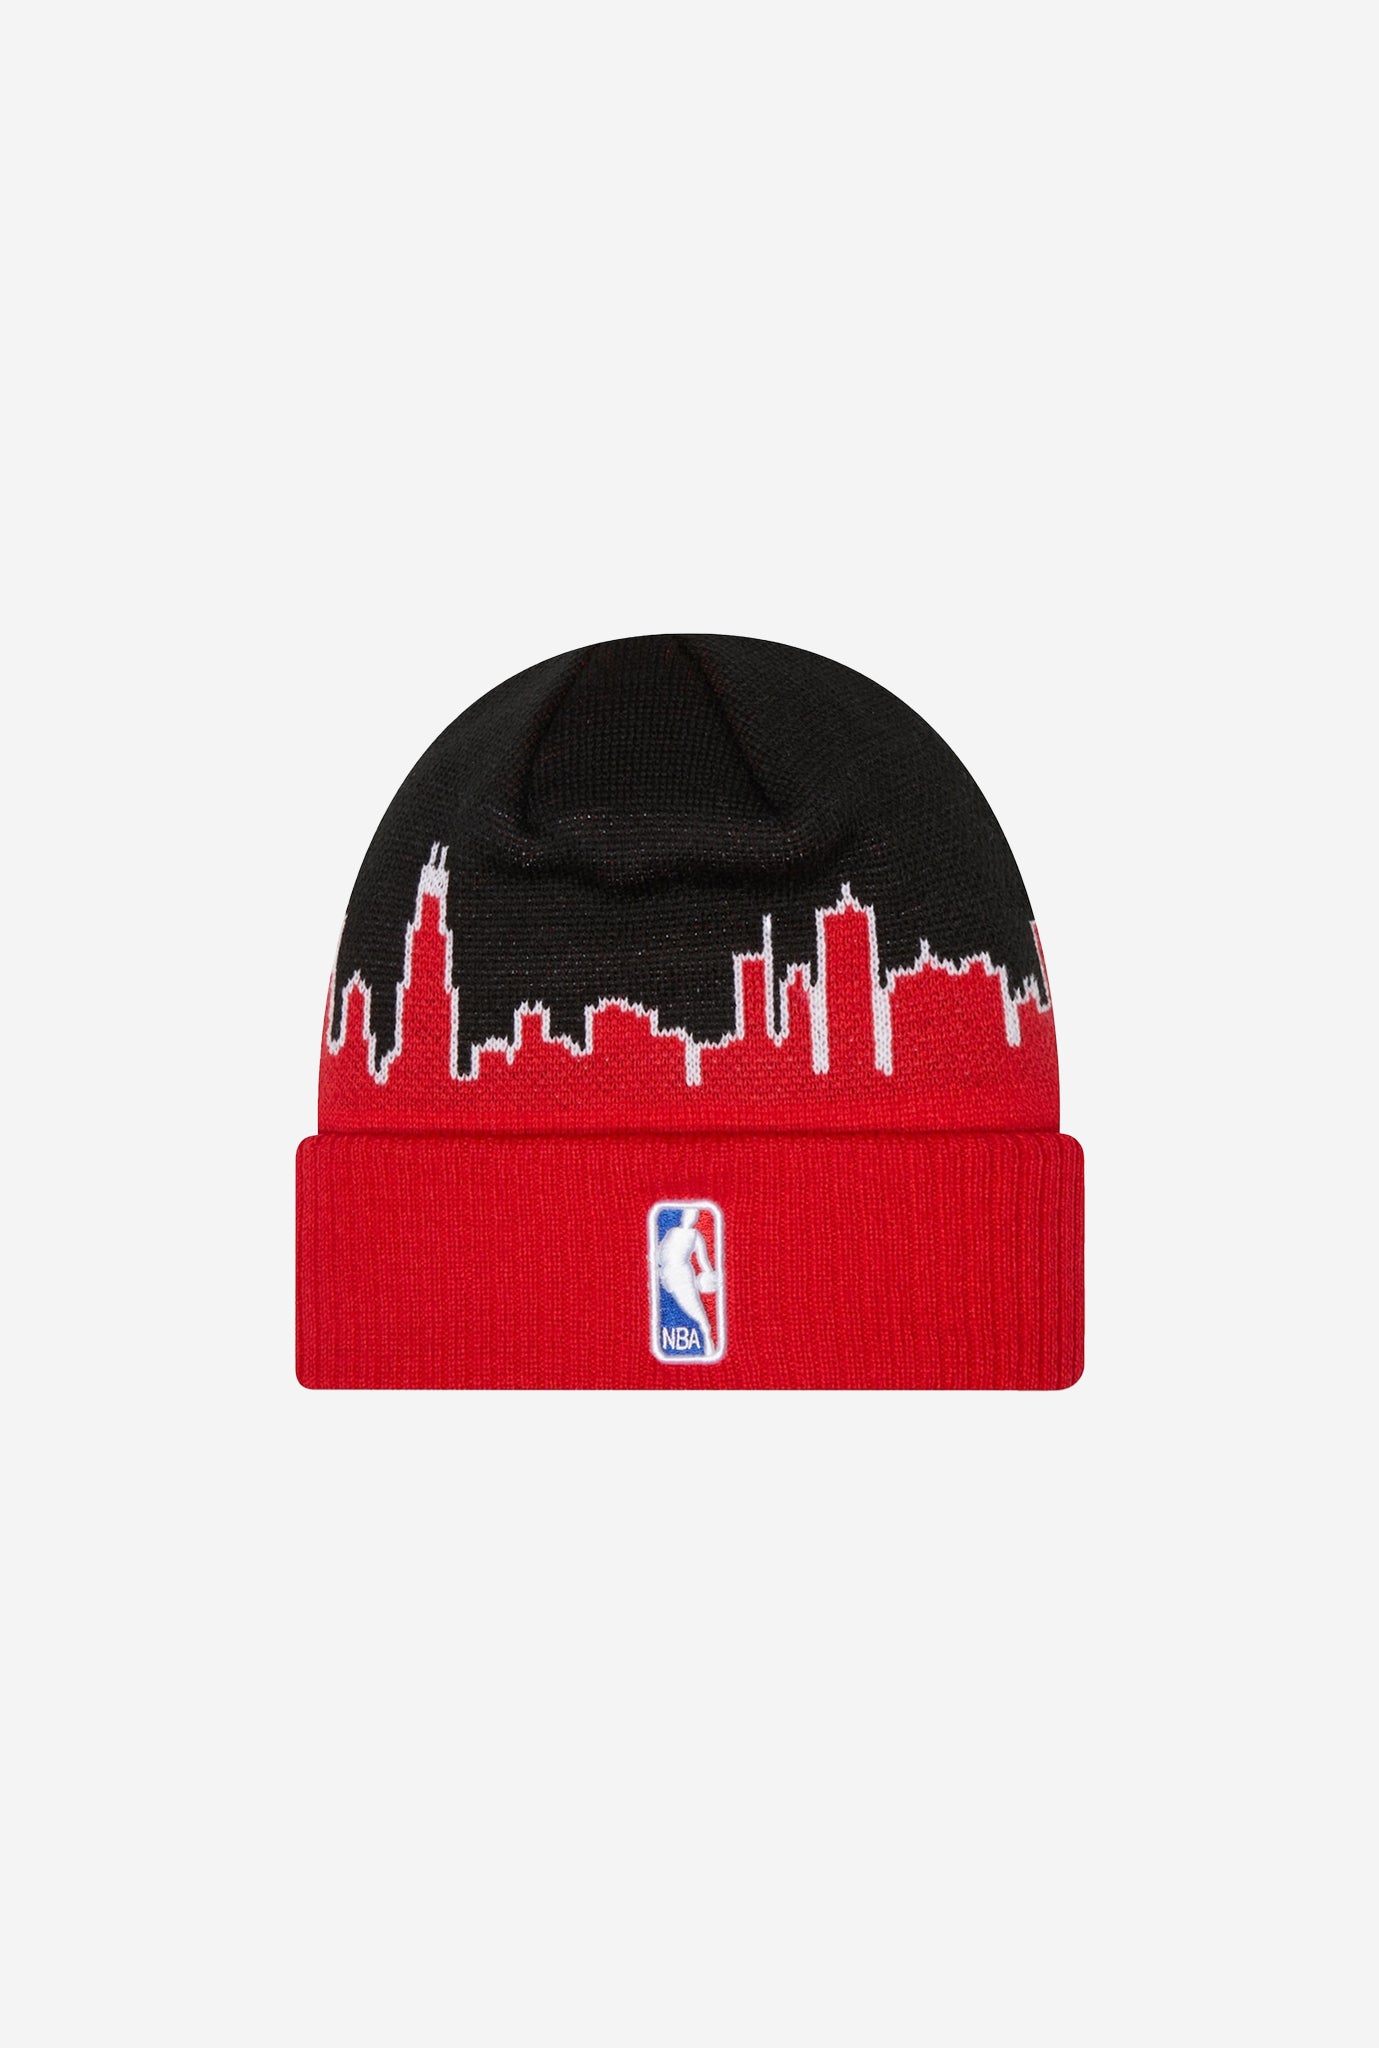 NBA Tip Off 22 Chicago Bulls Knit Beanie - Black/Red